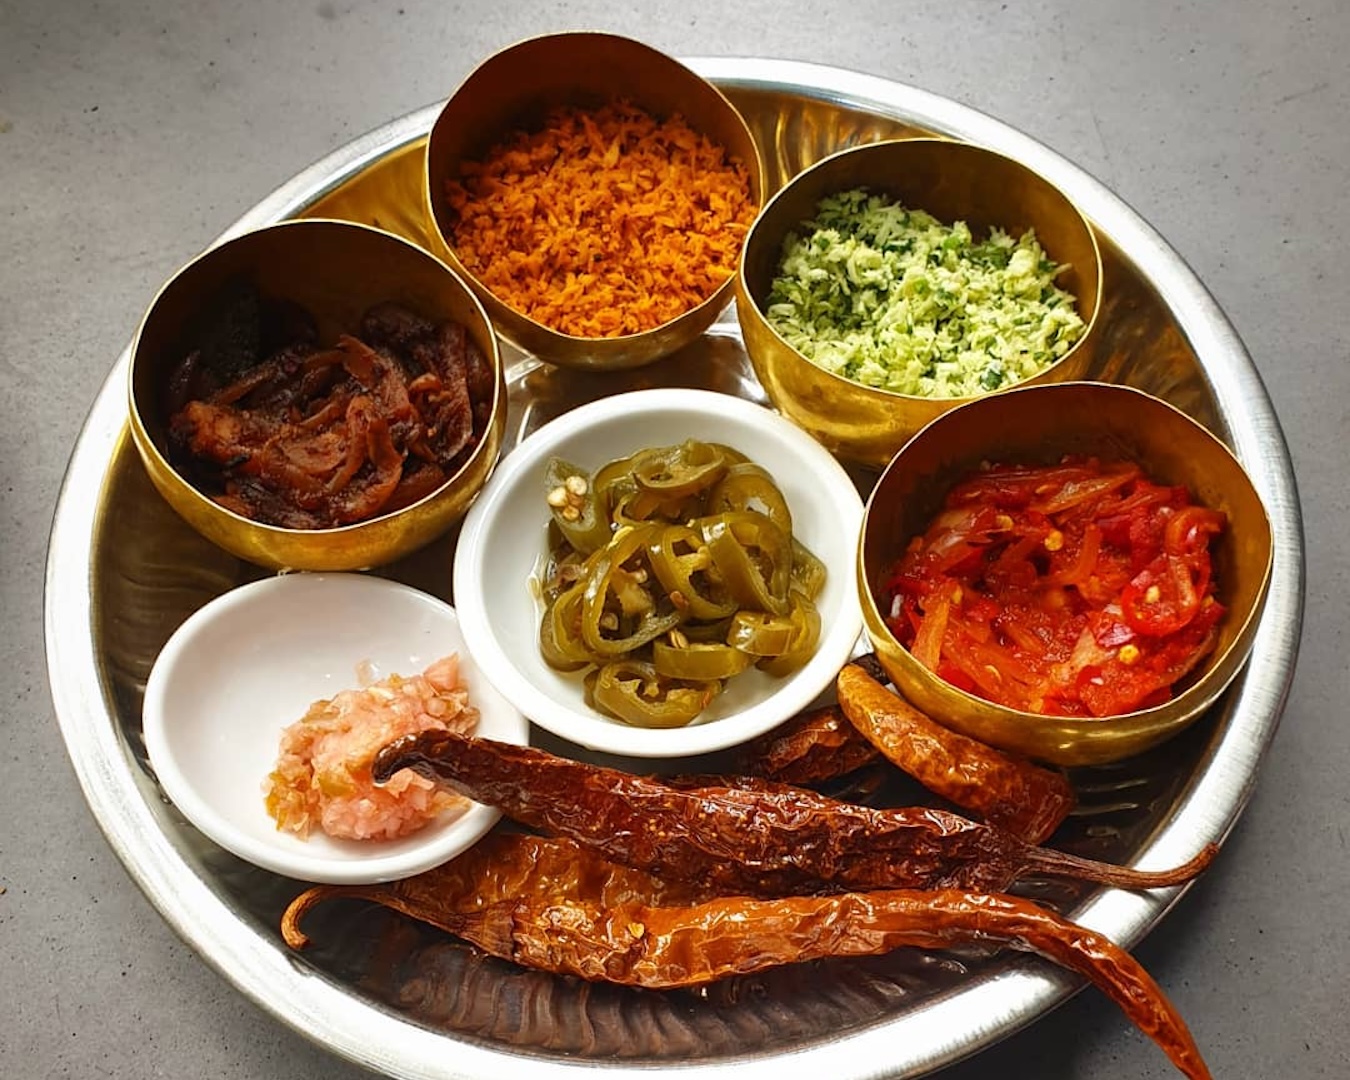 A plate of spices and sambol at Sydney Sri Lankan restaurant Lankan Filling Station